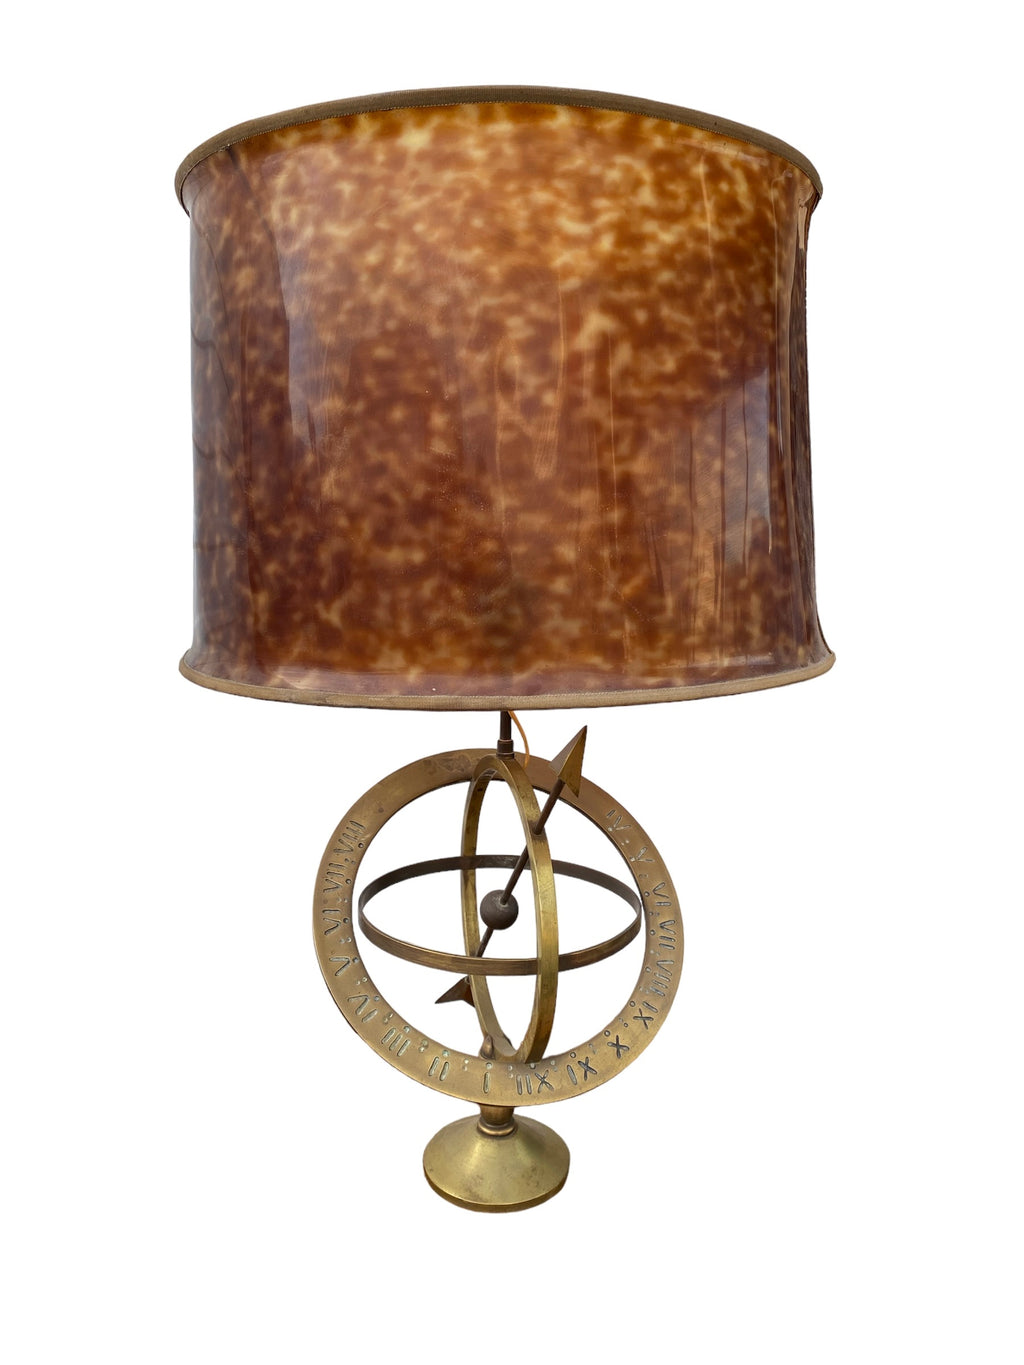 French Midcentury Lamp